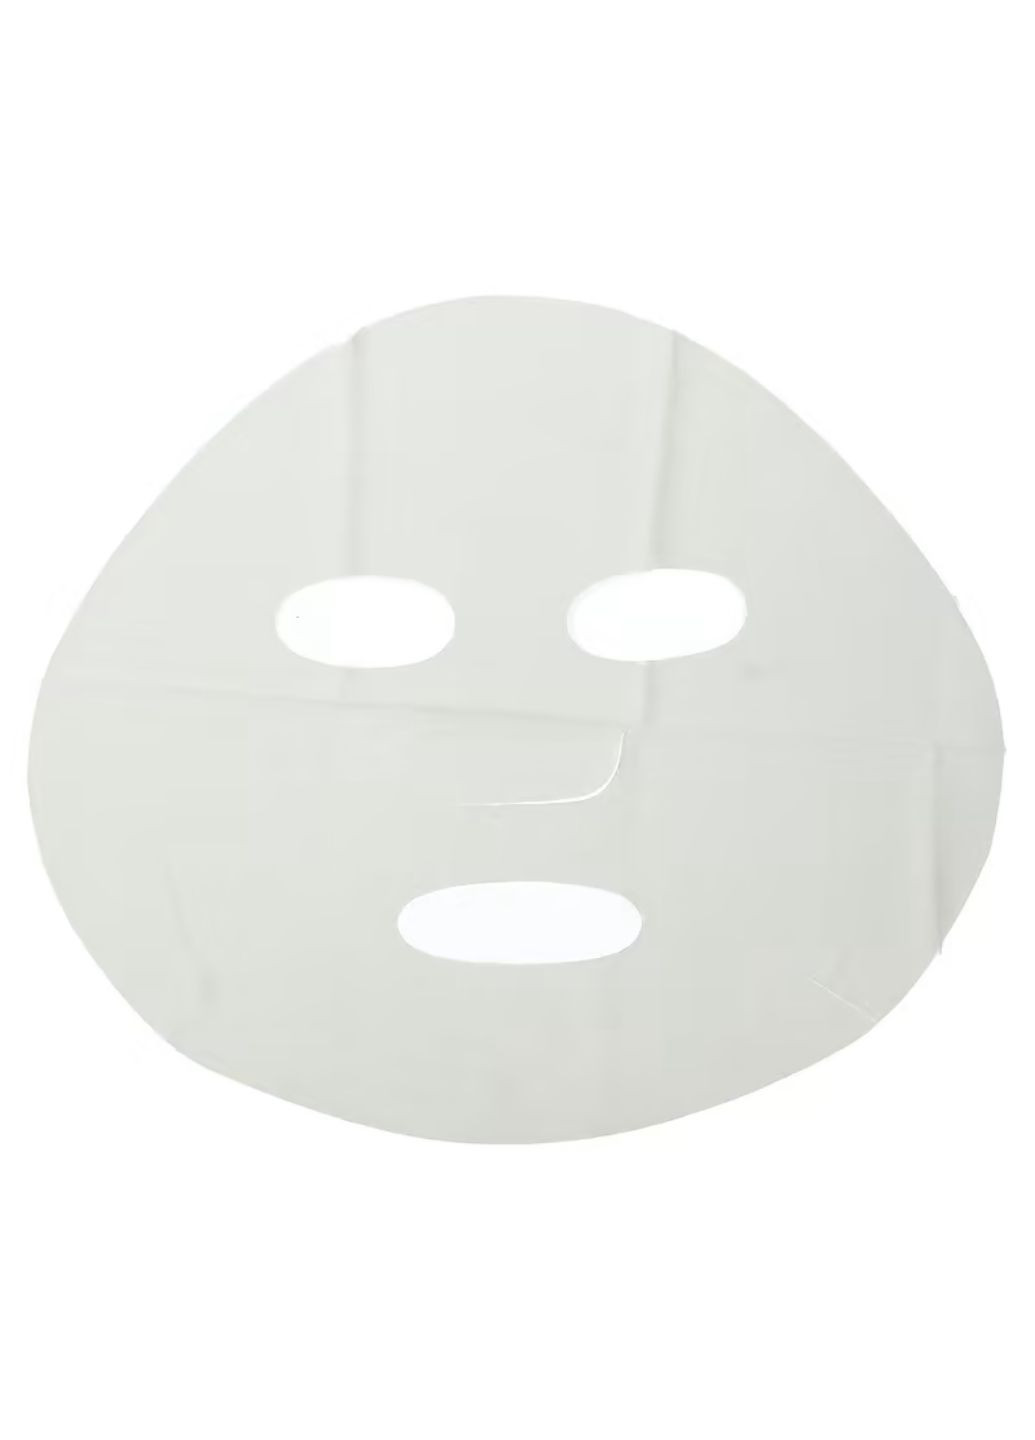 Тканевая маска для лица с экстрактом трюфеля Truffle Moisturizing Beauty Mask, 25 мл Images (278040358)